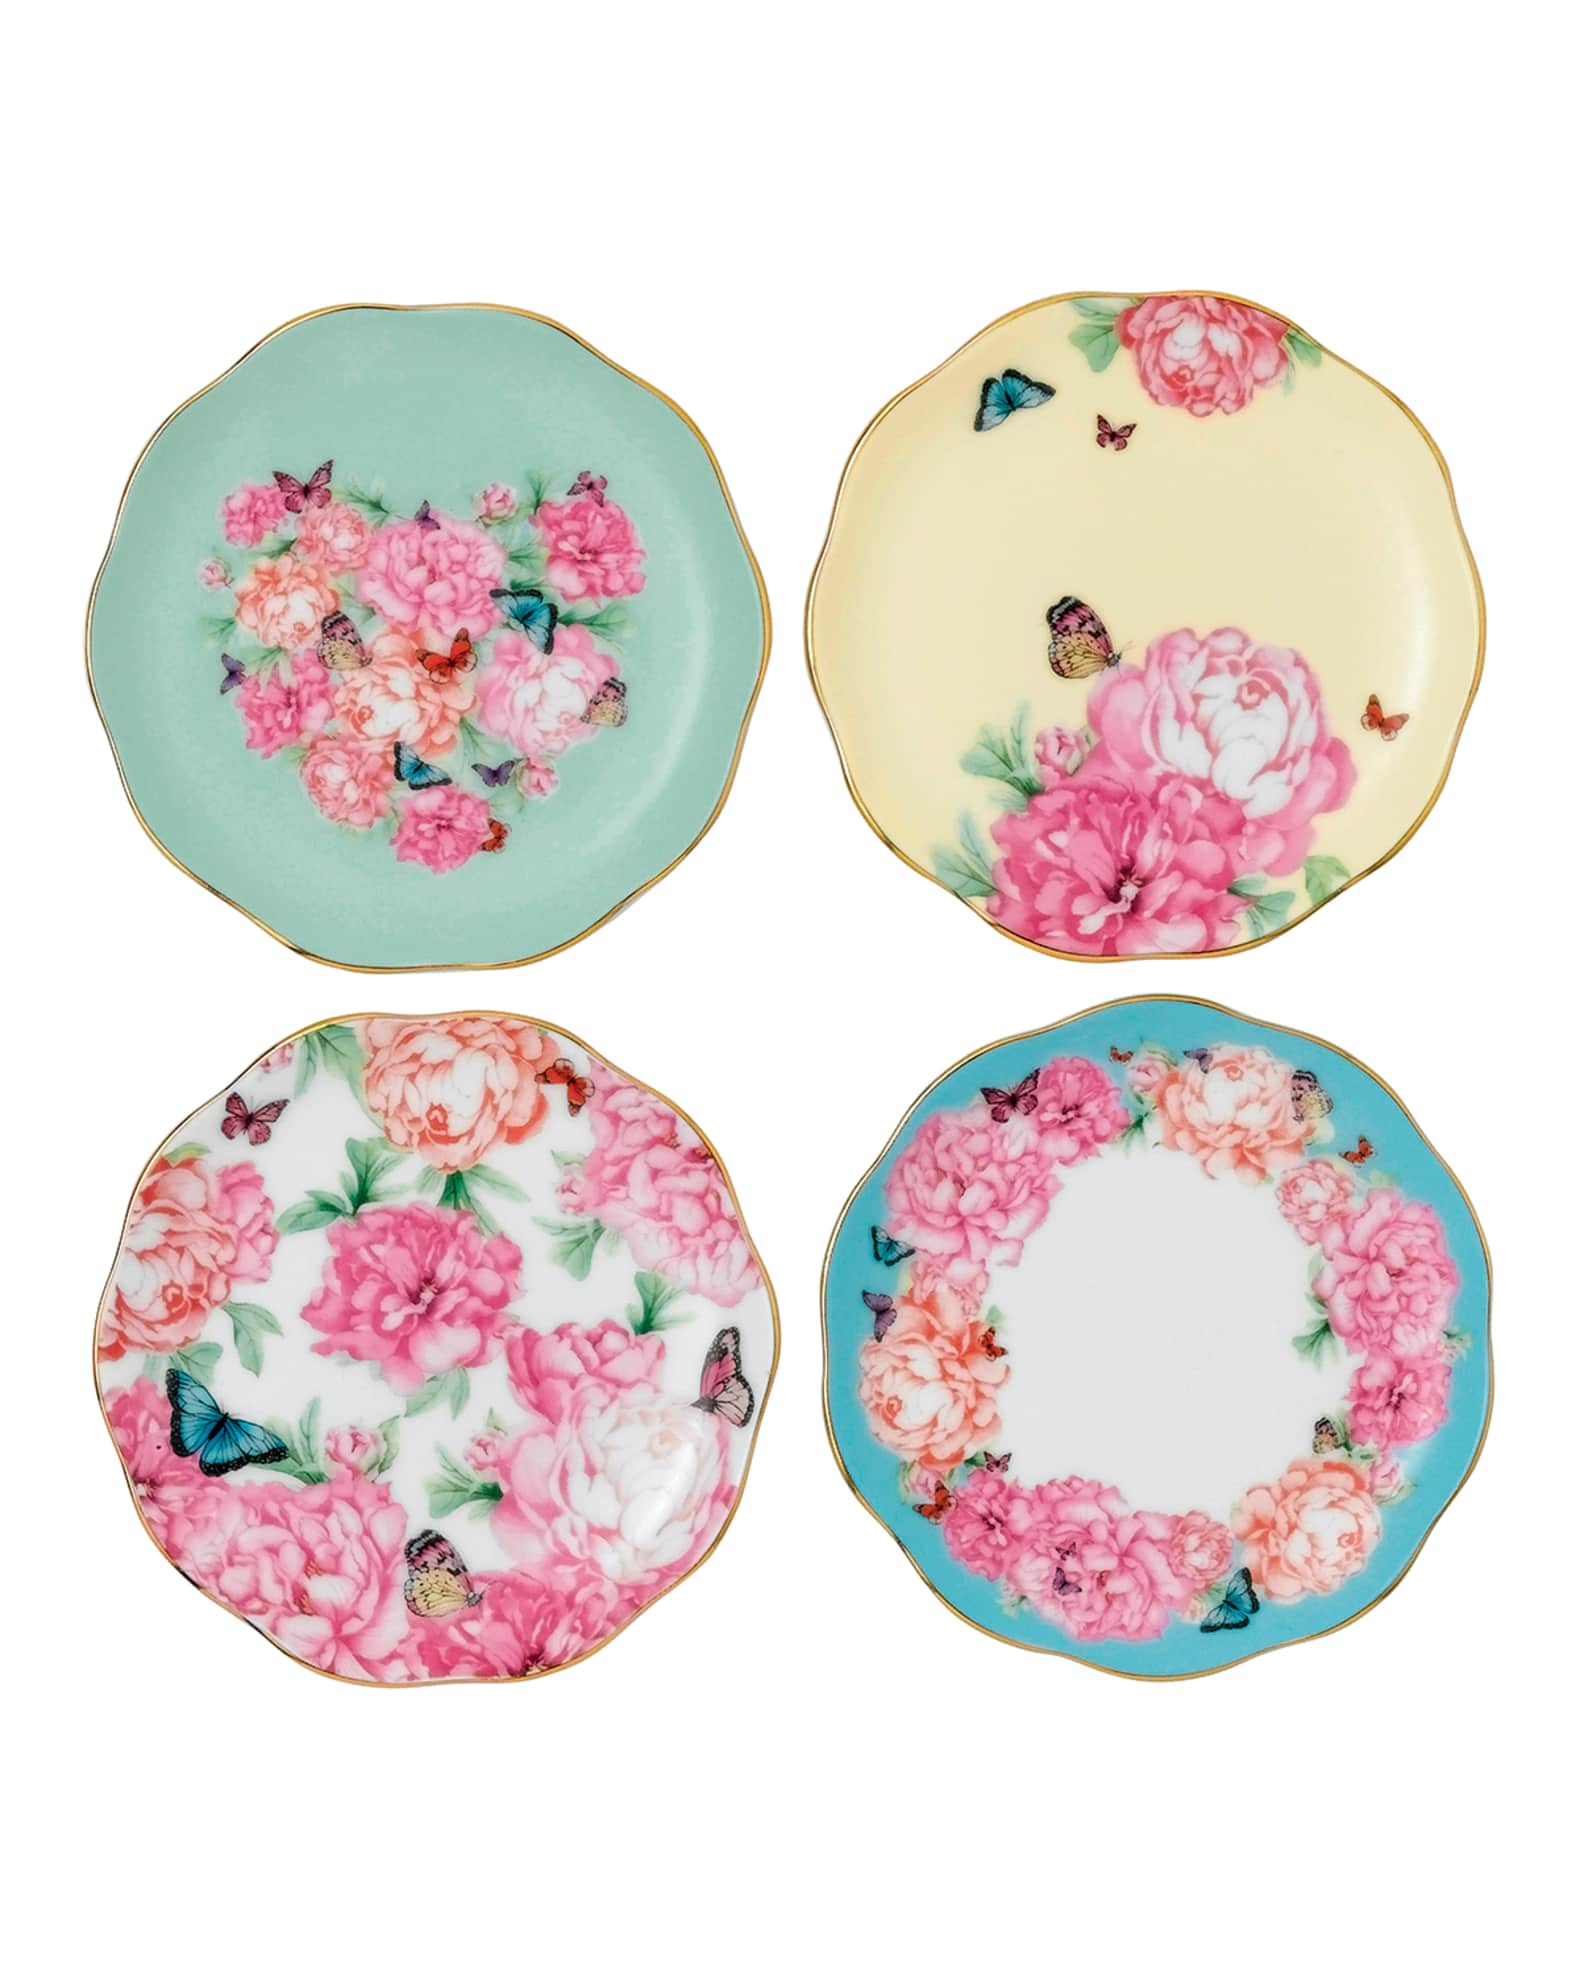 Miranda Kerr for Royal Albert Mixed Pattern Tidbit Plates, Set of 4